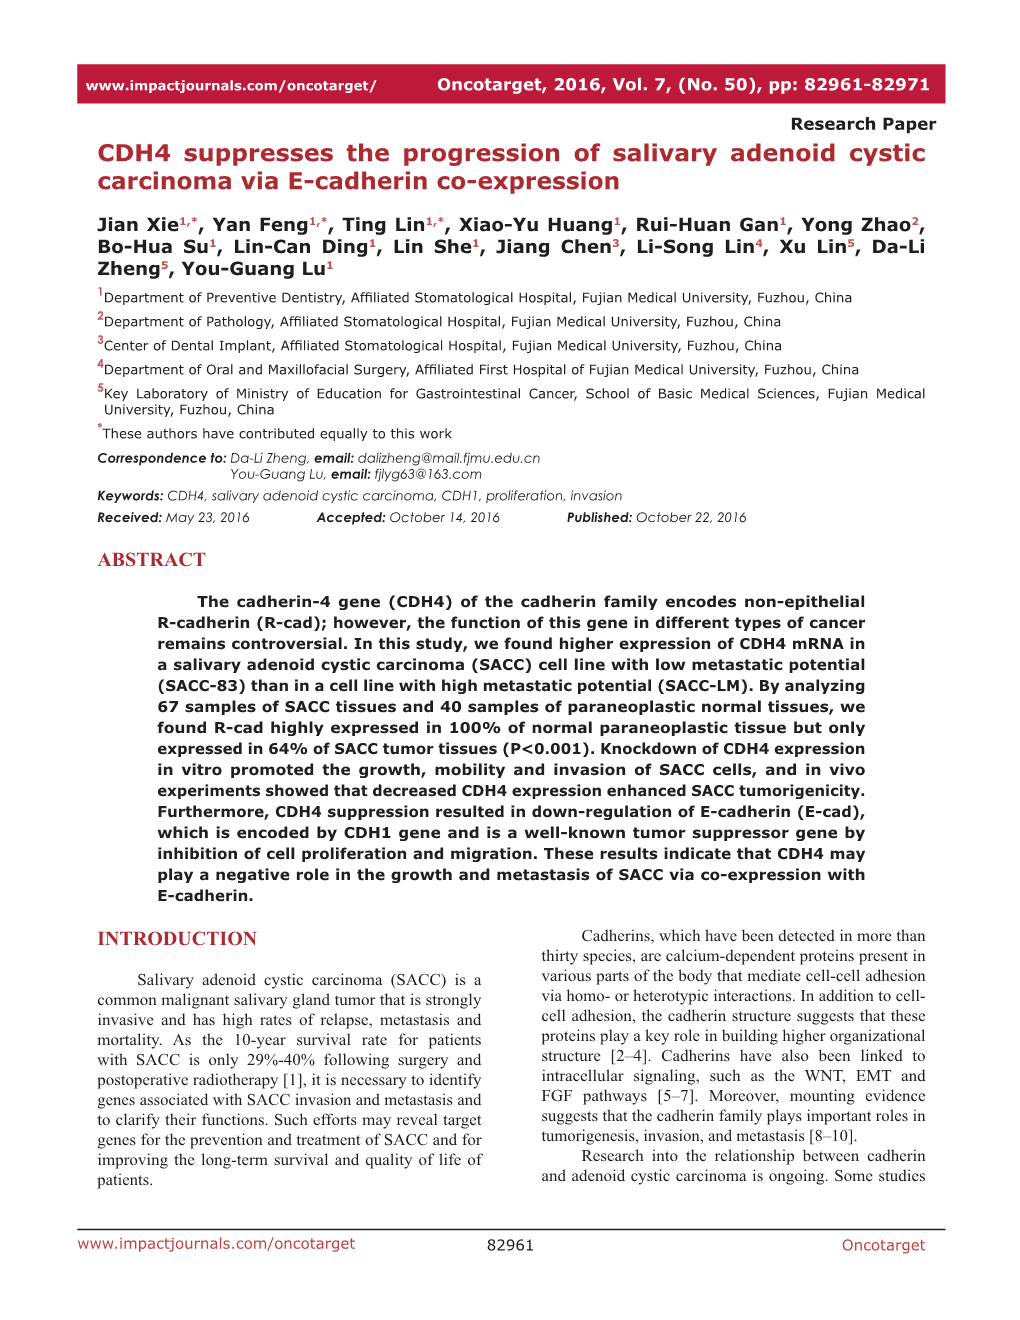 CDH4 Suppresses the Progression of Salivary Adenoid Cystic Carcinoma Via E-Cadherin Co-Expression